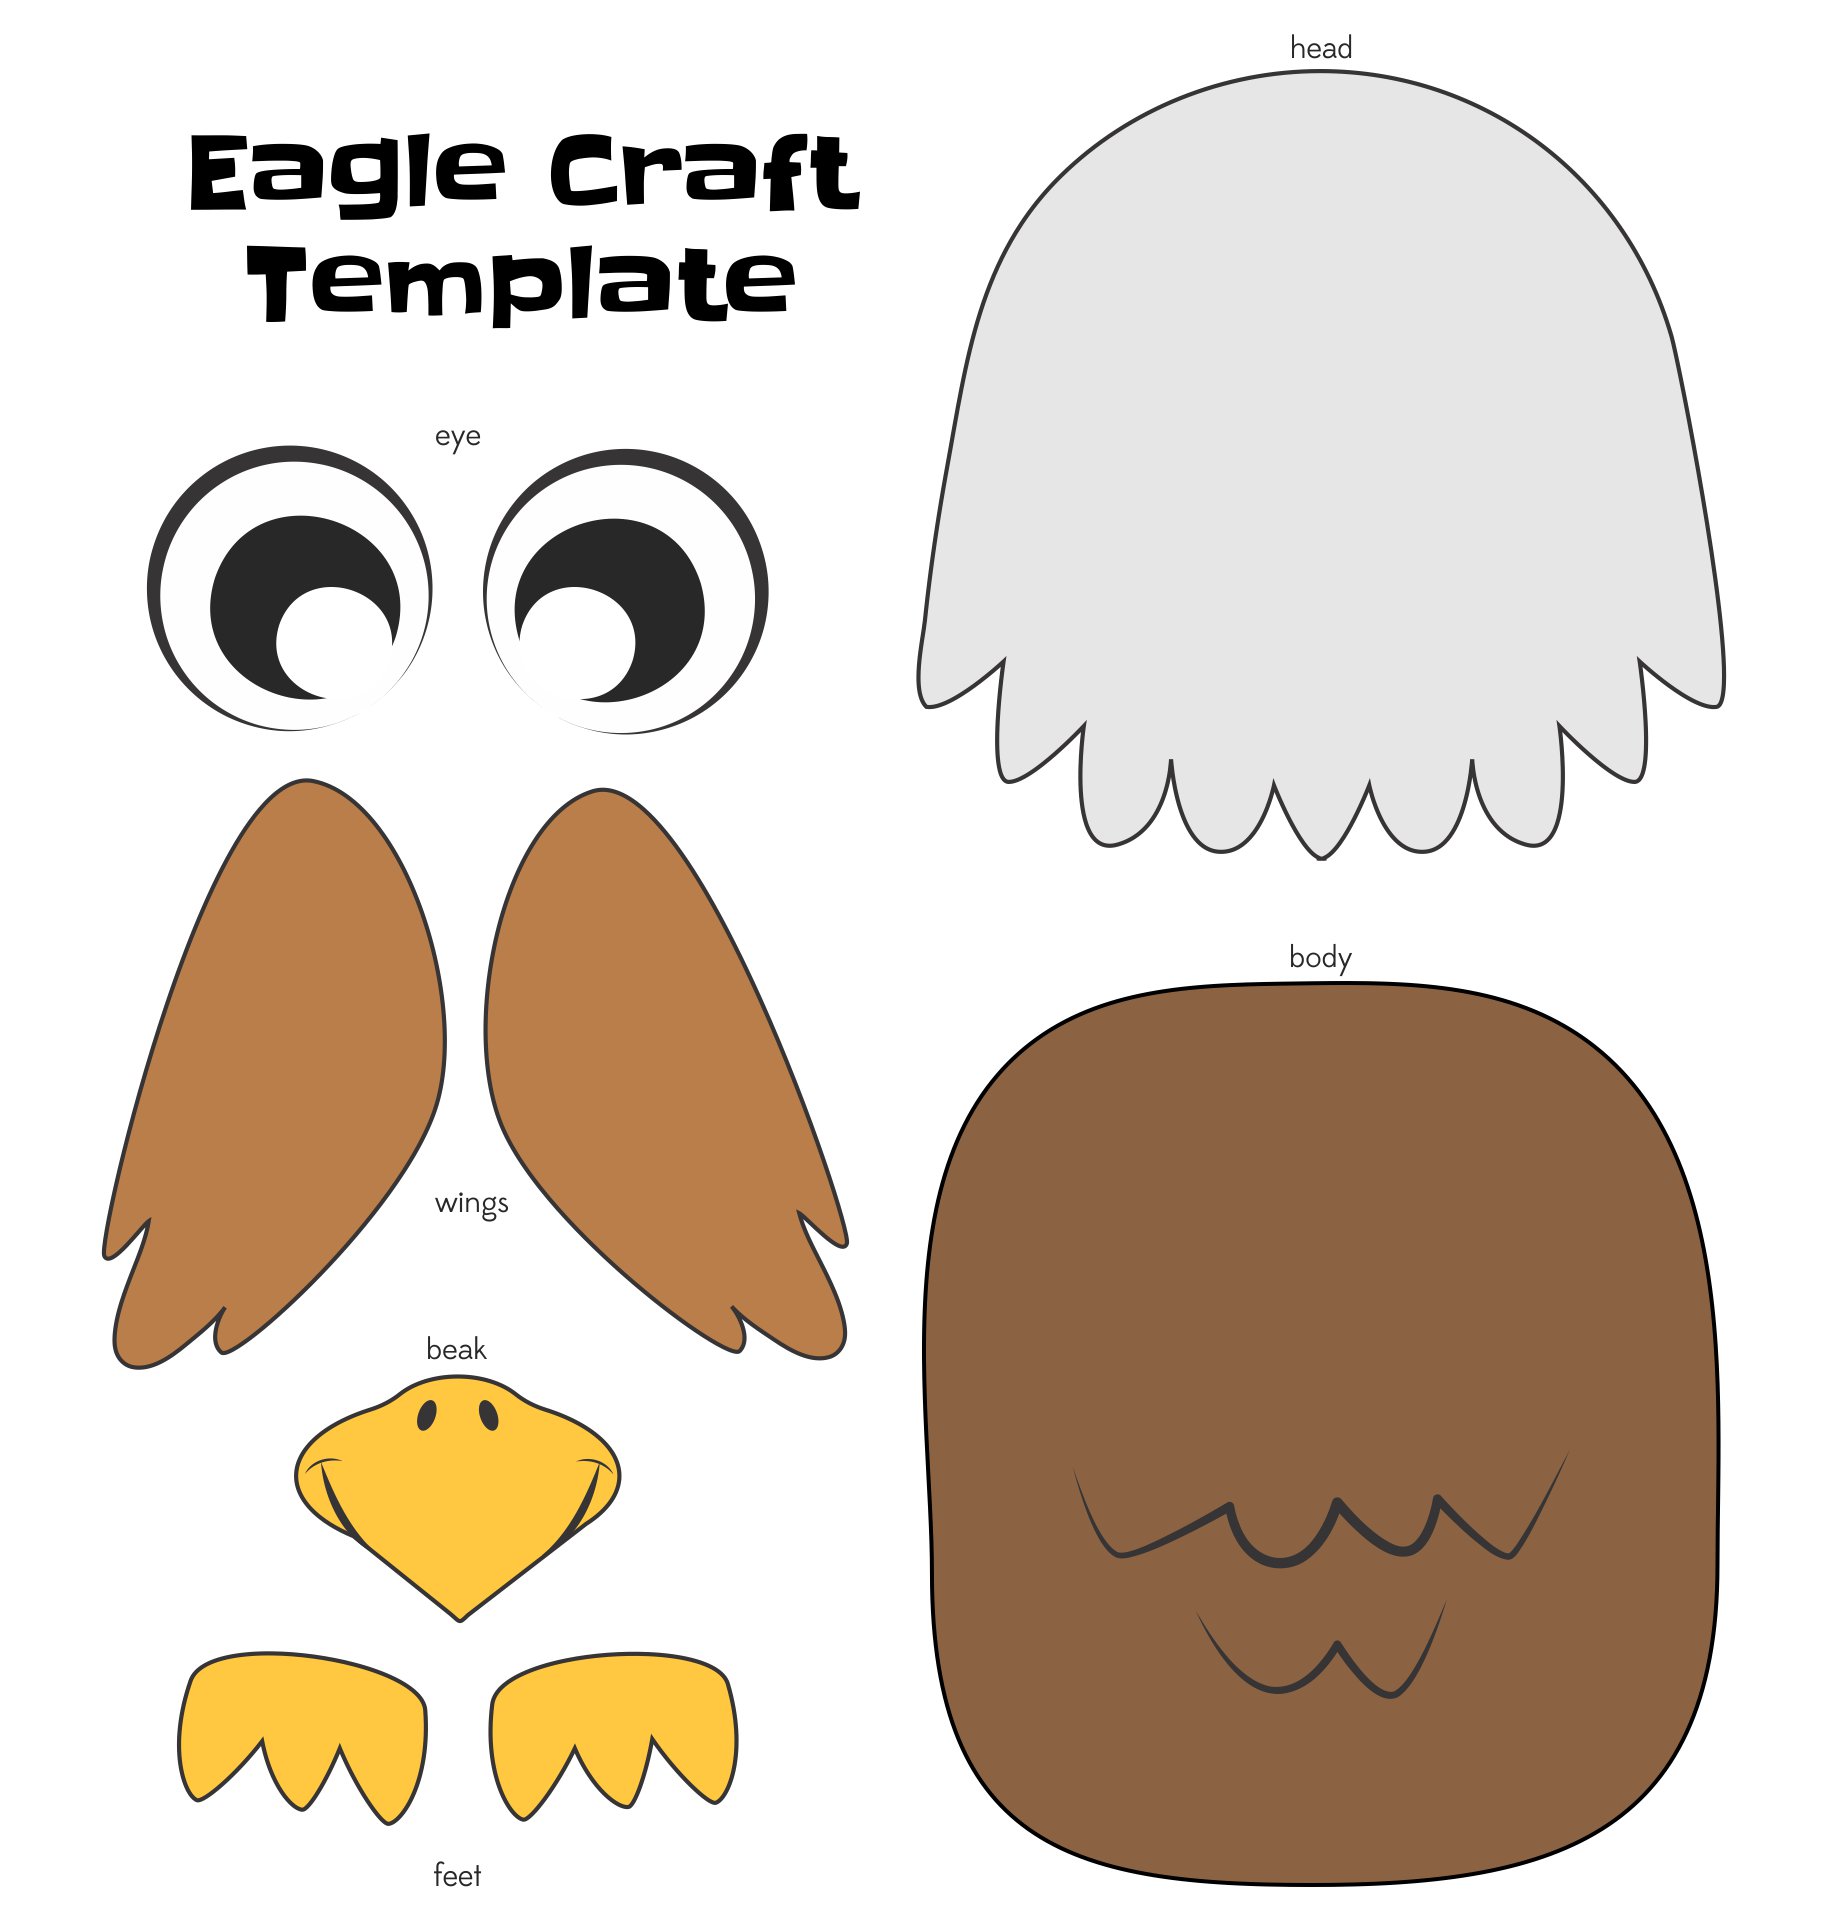 Eagle Craft Template